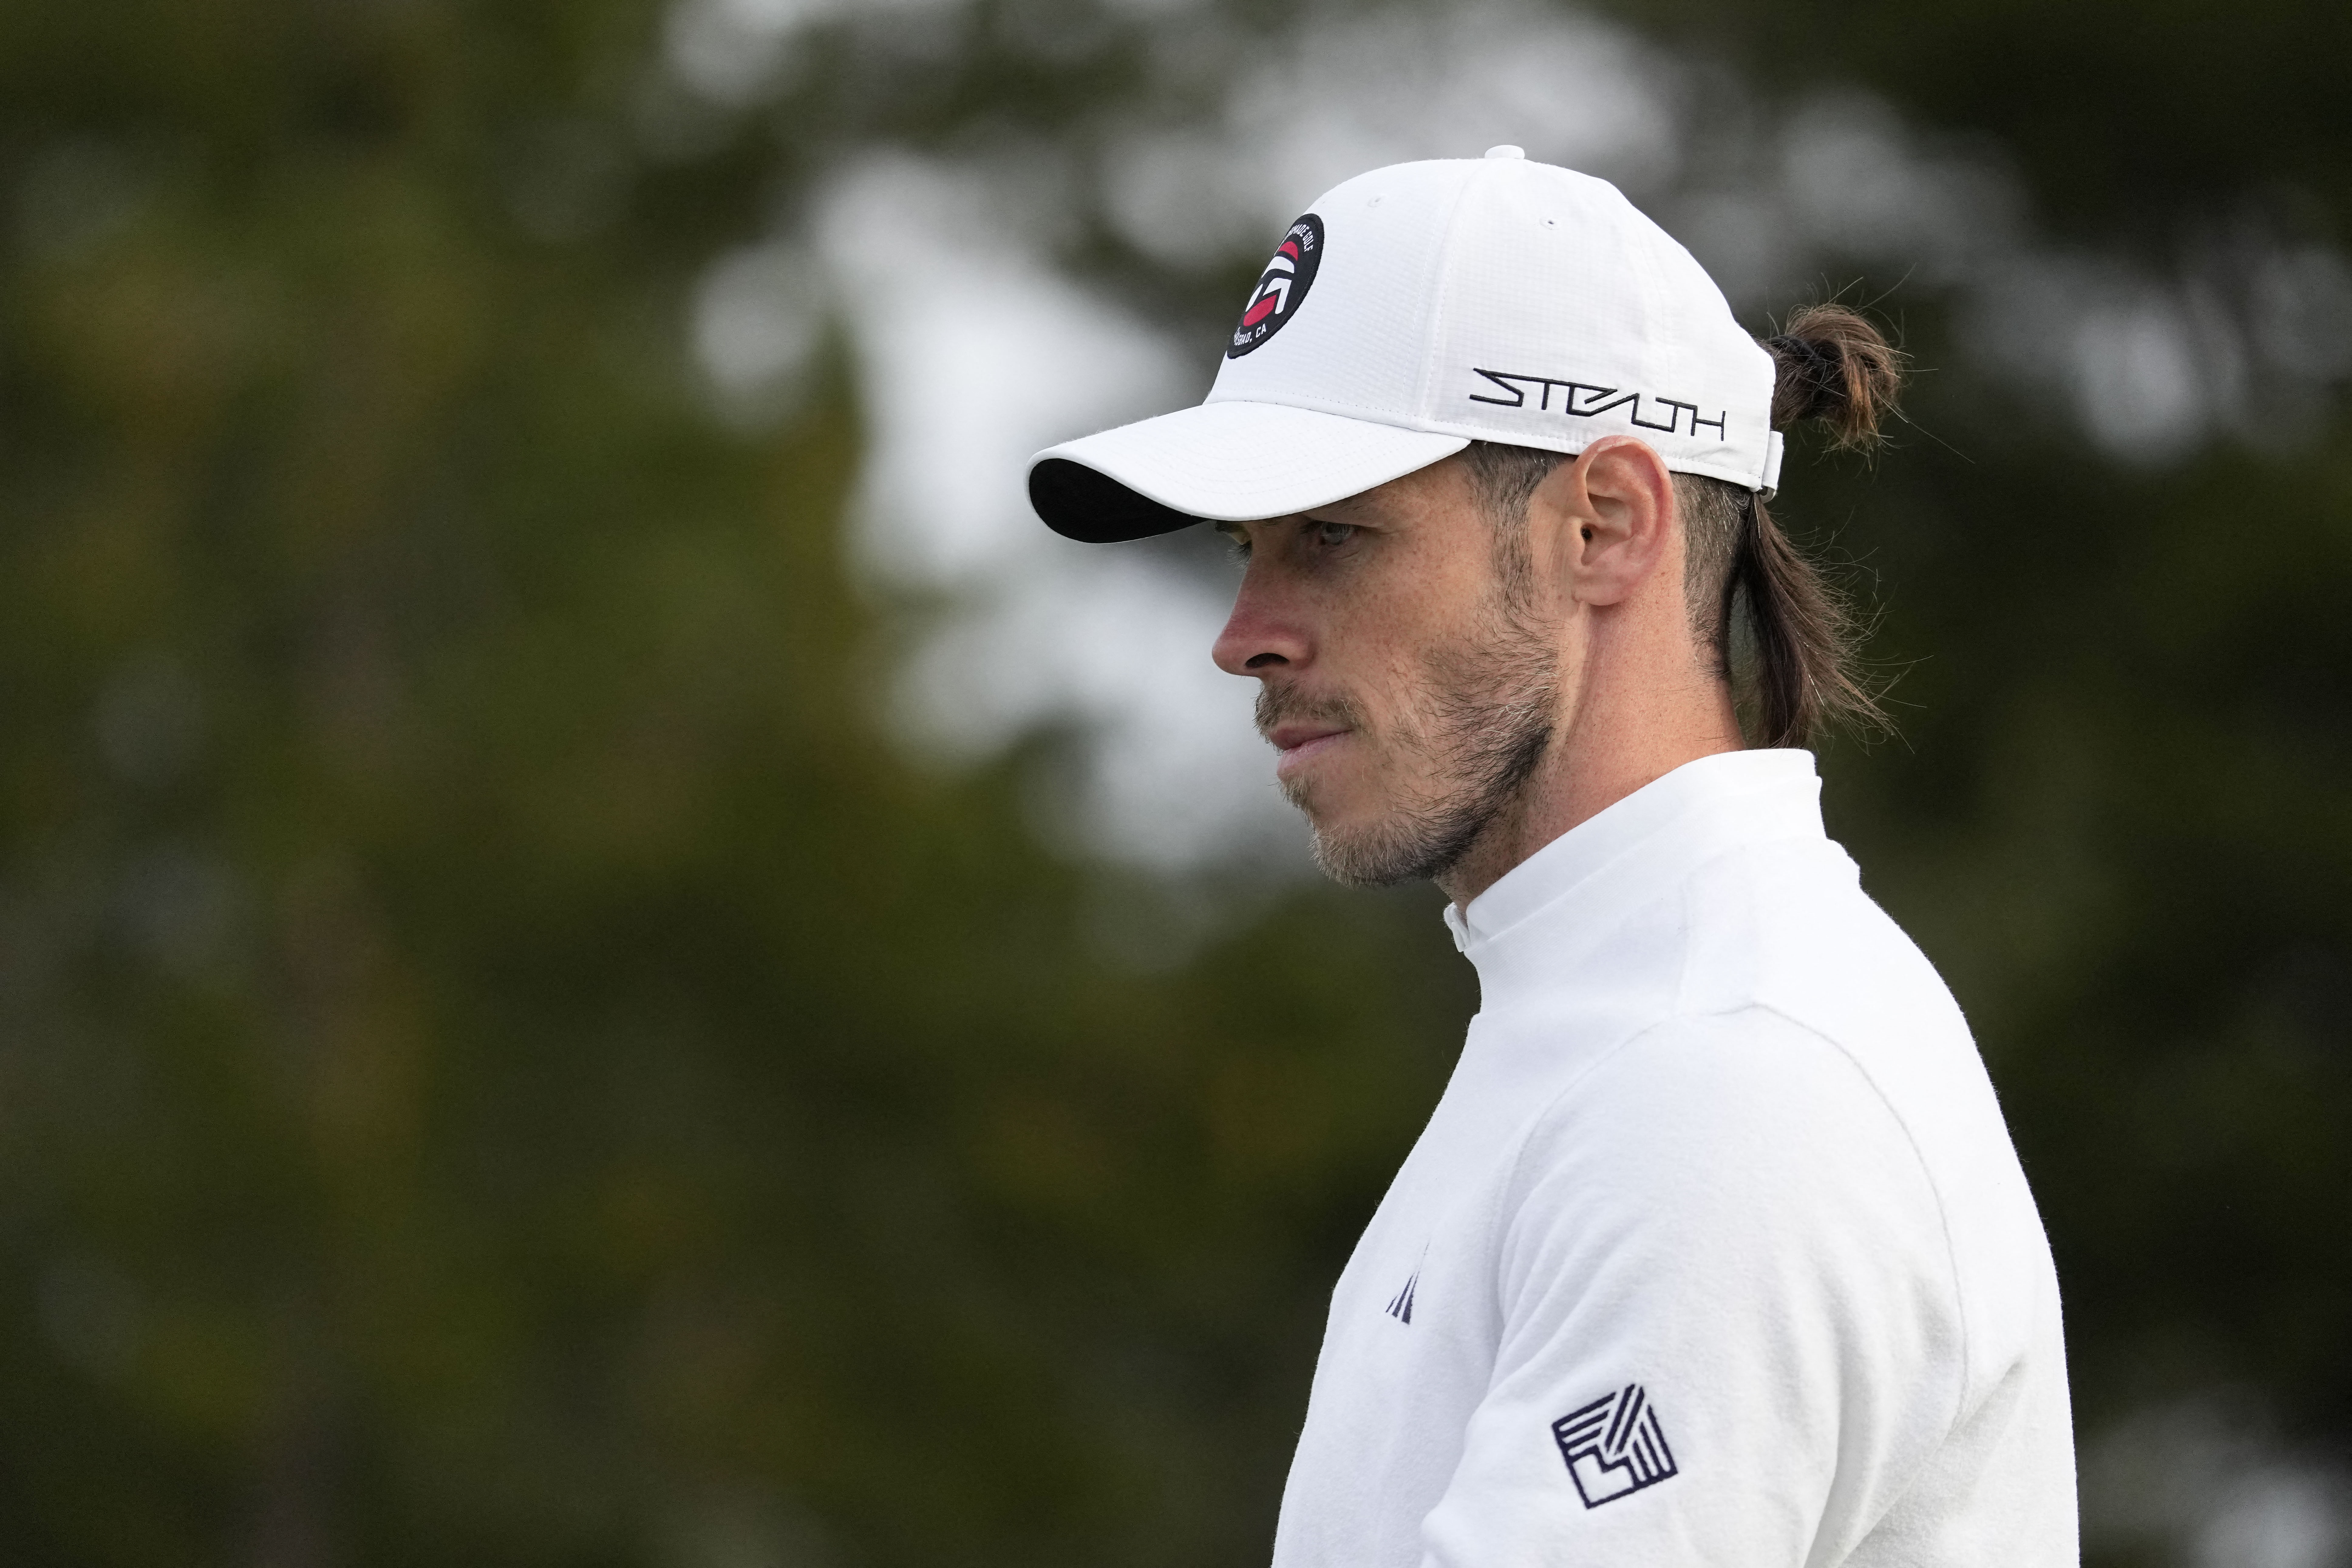 Gareth Bale debutó como jugador de golf en Estados Unidos (USA Today)